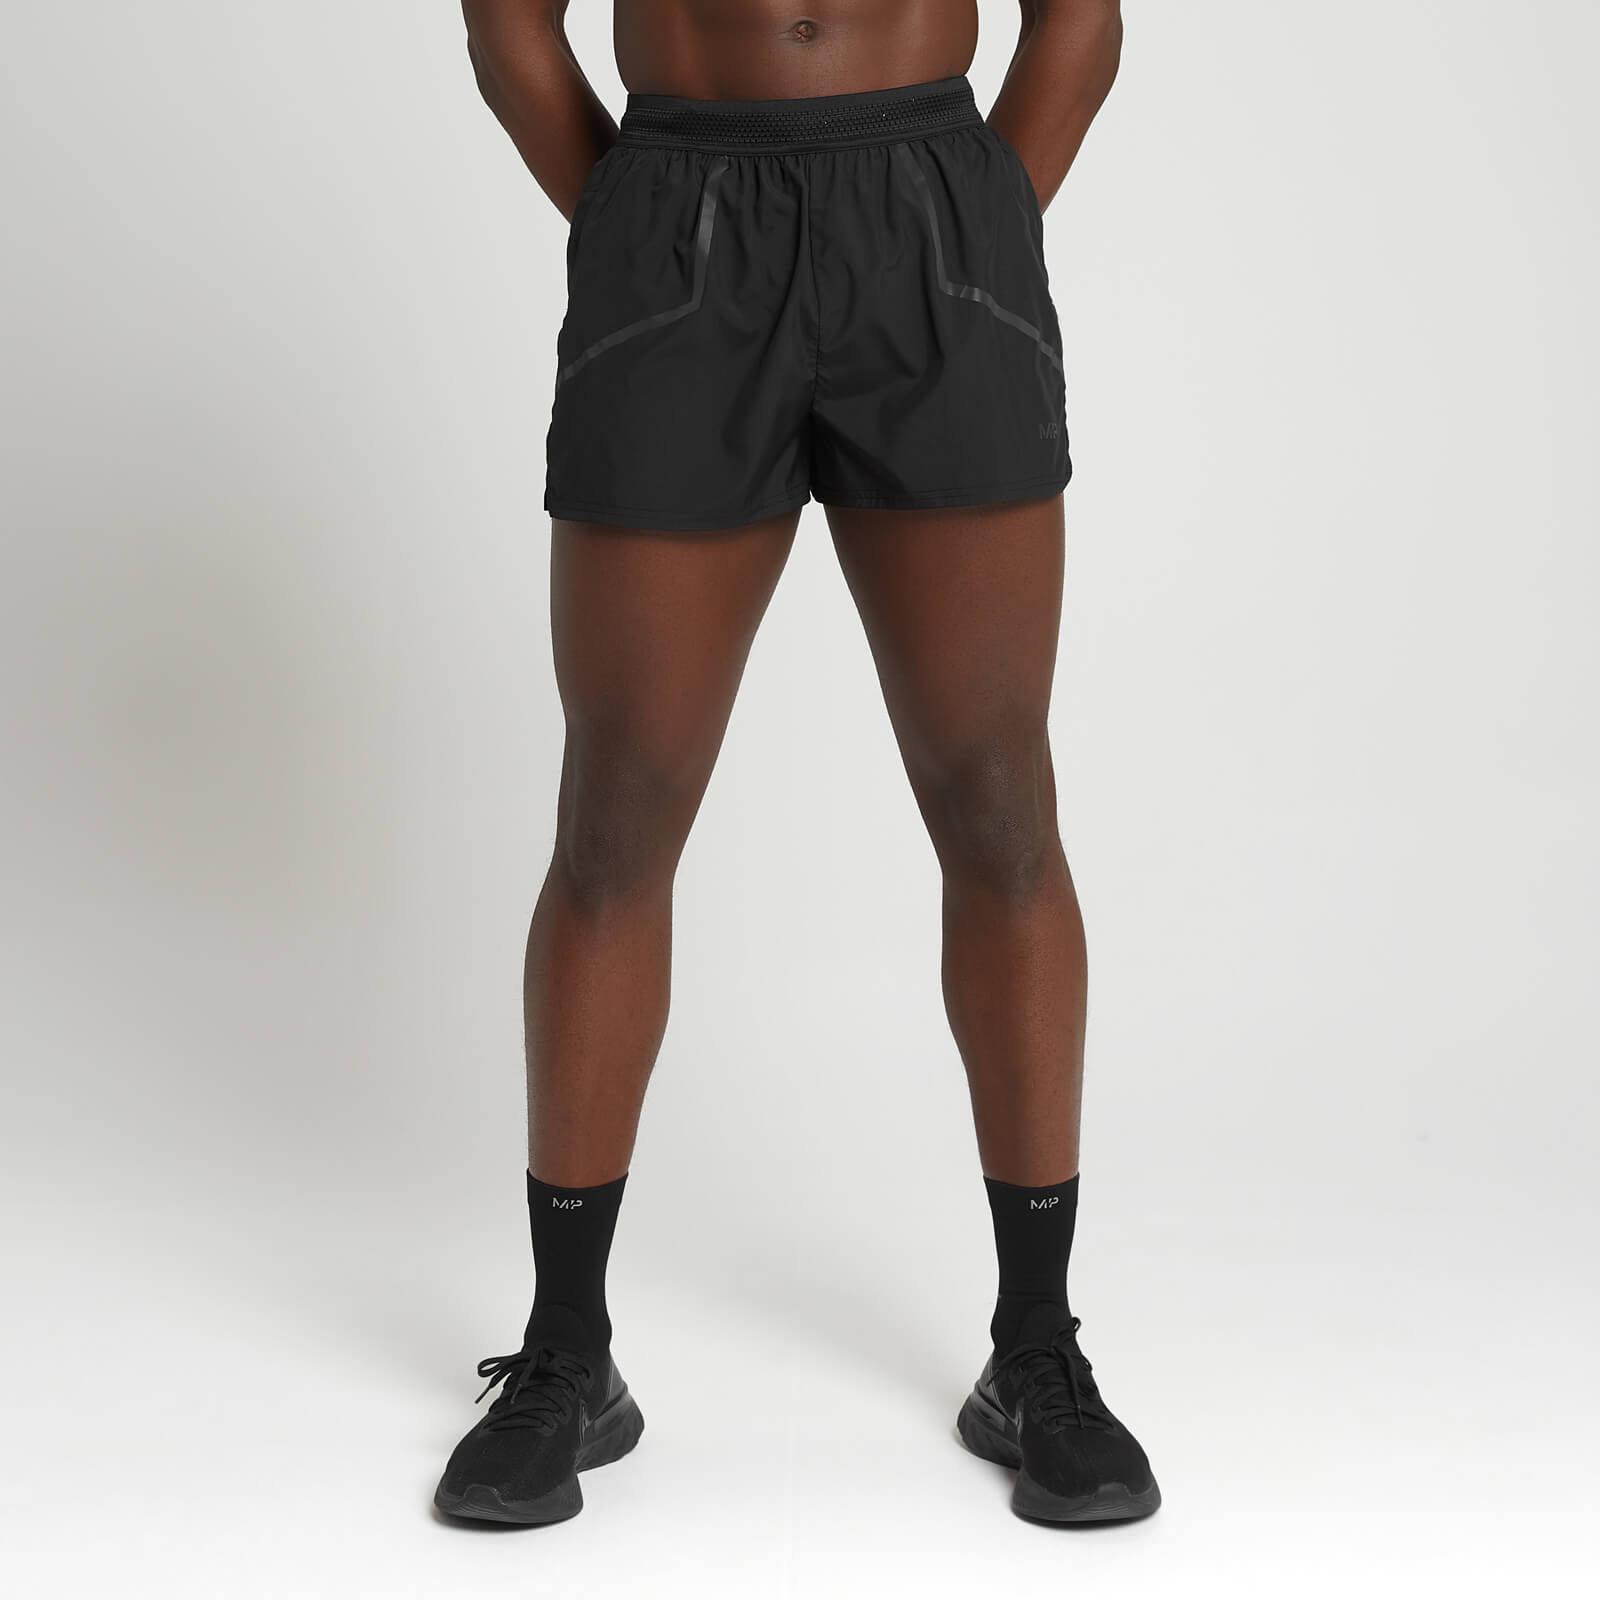 MP Men's Velocity Ultra 3 Inch Shorts - Black - XXXL